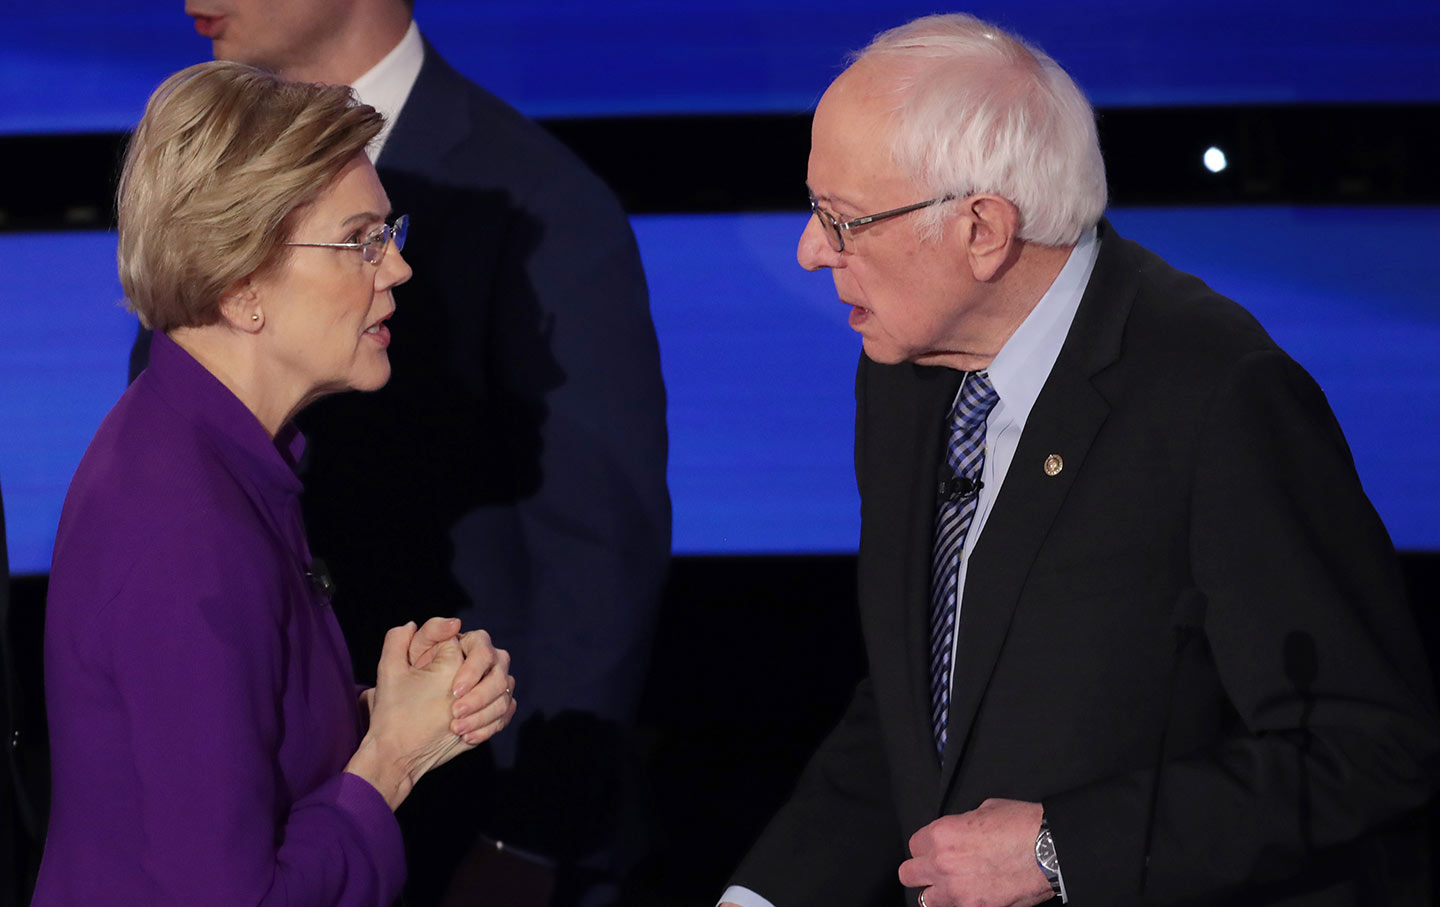 Sanders or Warren: Time to Choose?